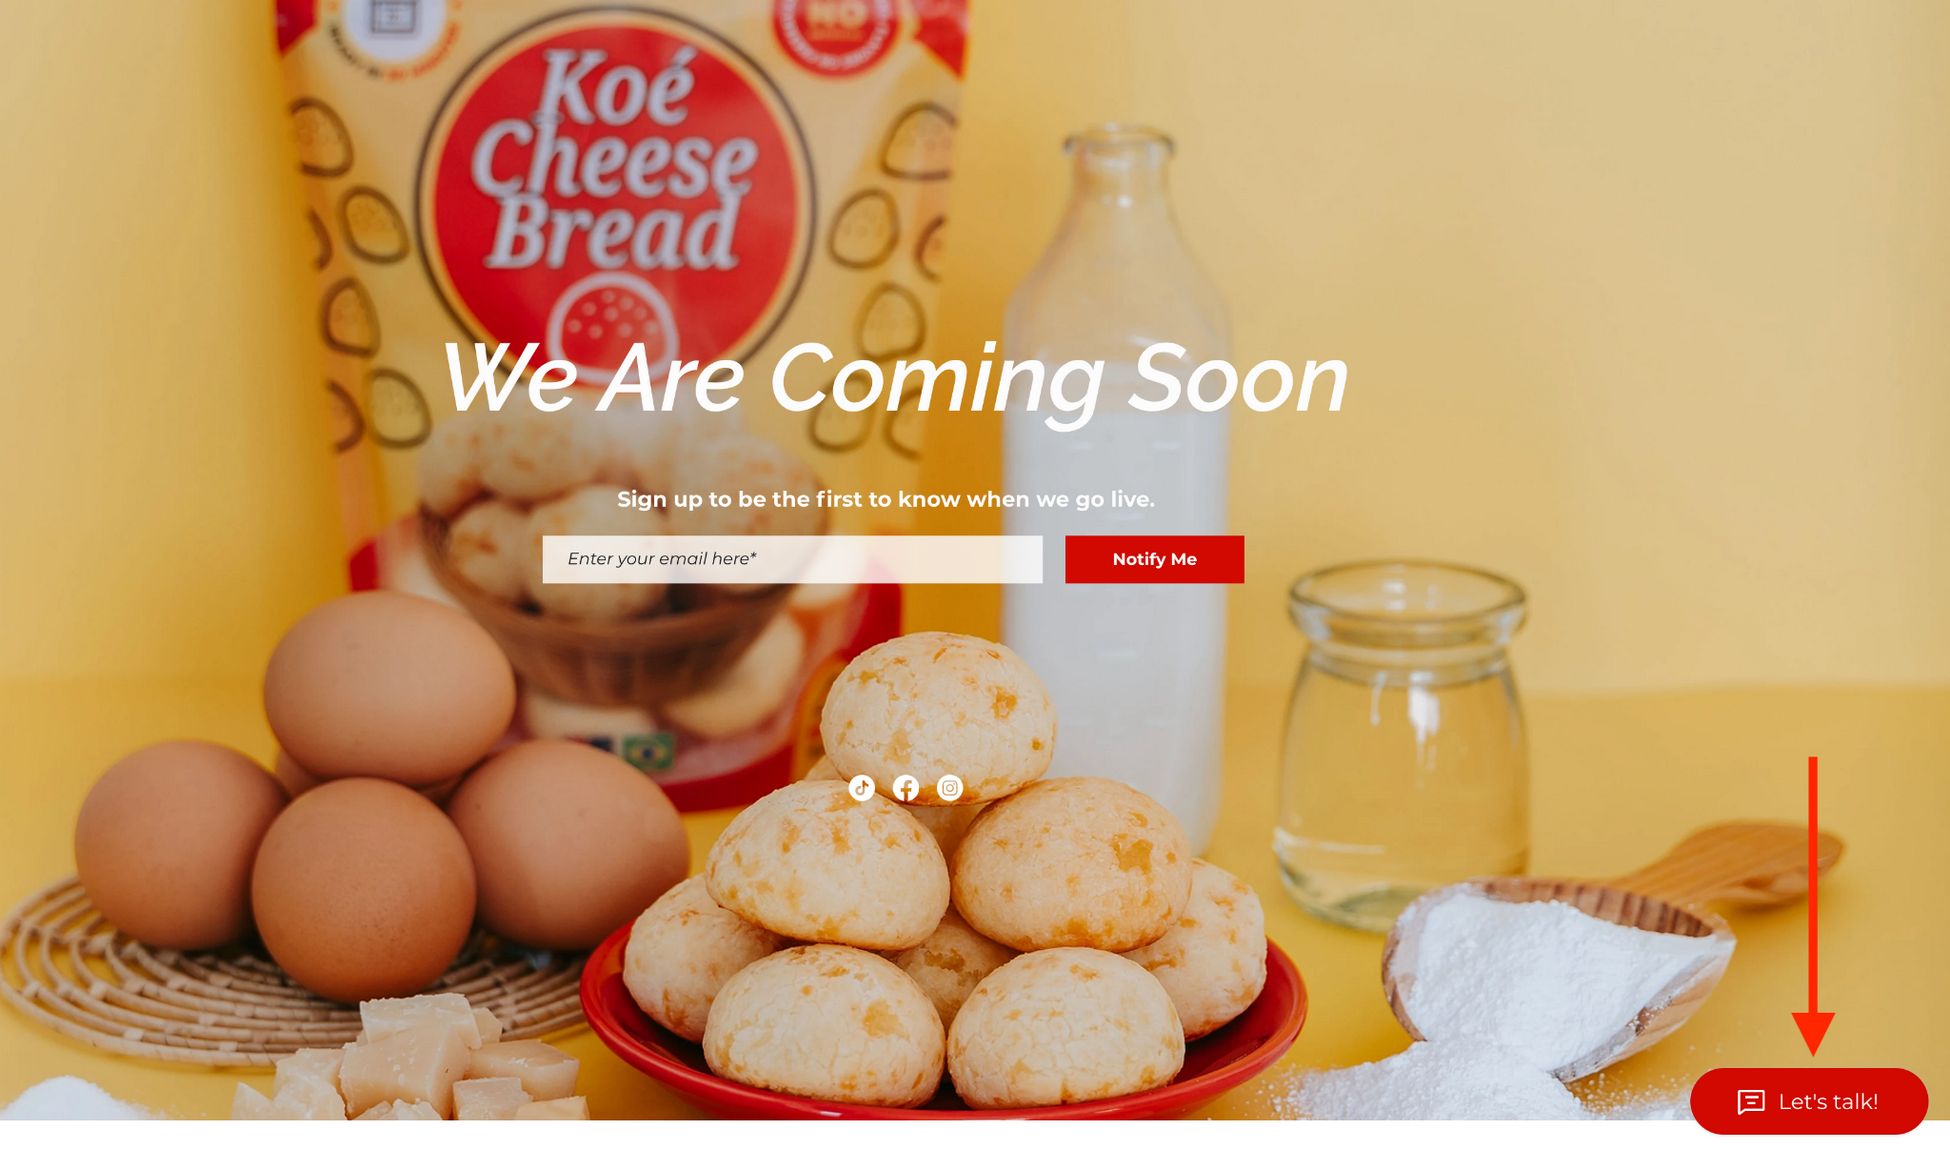 Koe cheeze bread wordpress coming soon page